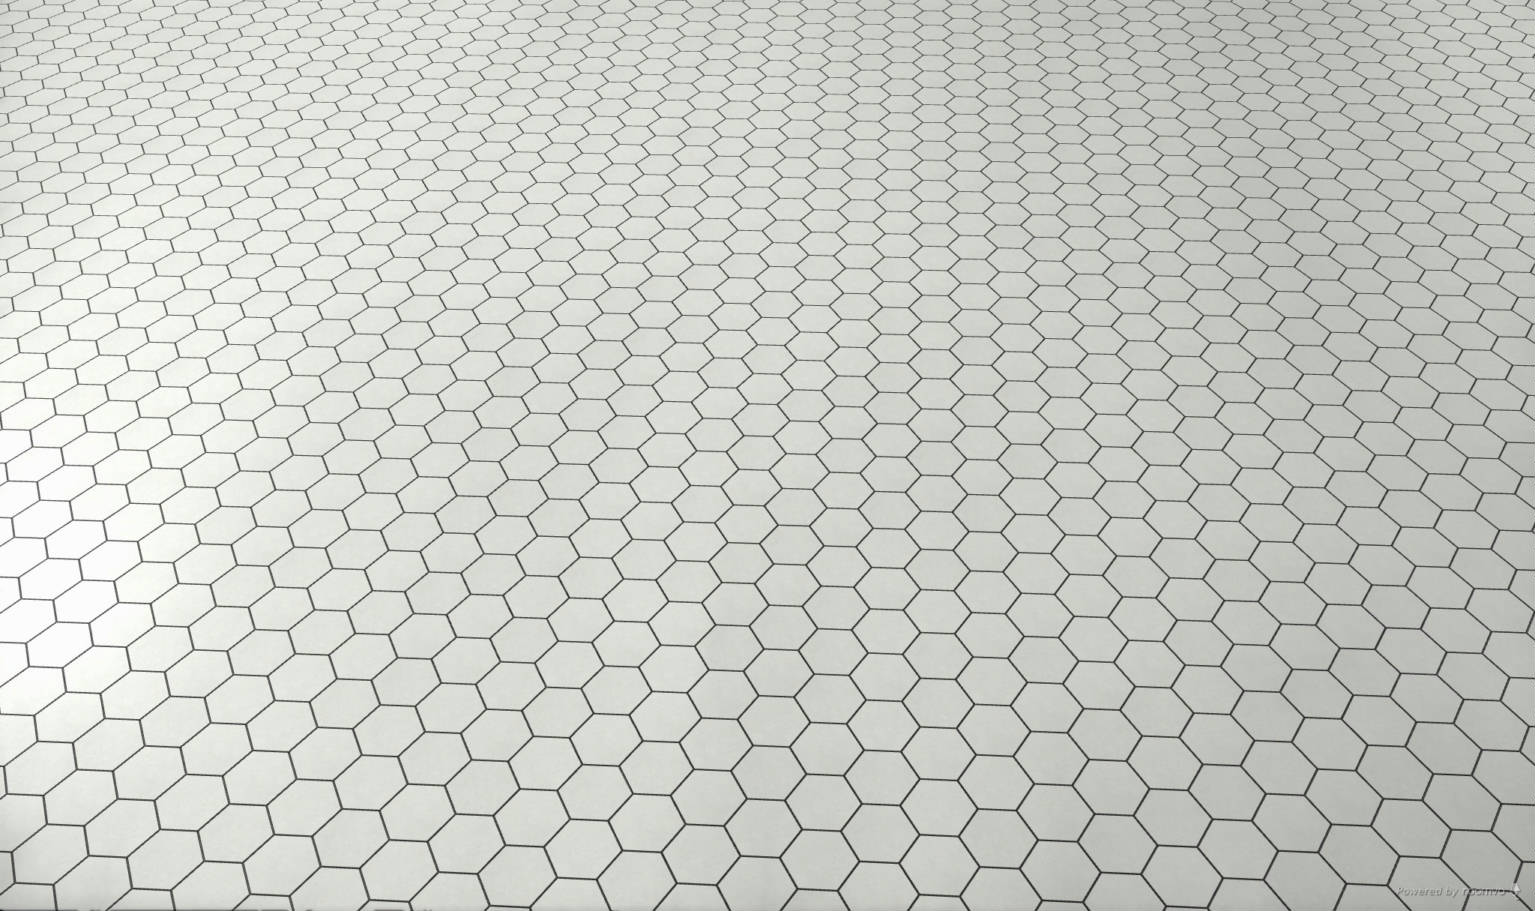 Ashland White Hexagon 3X3" Mosaic | Qualis Ceramica | Luxury Tile and Vinyl at affordable prices